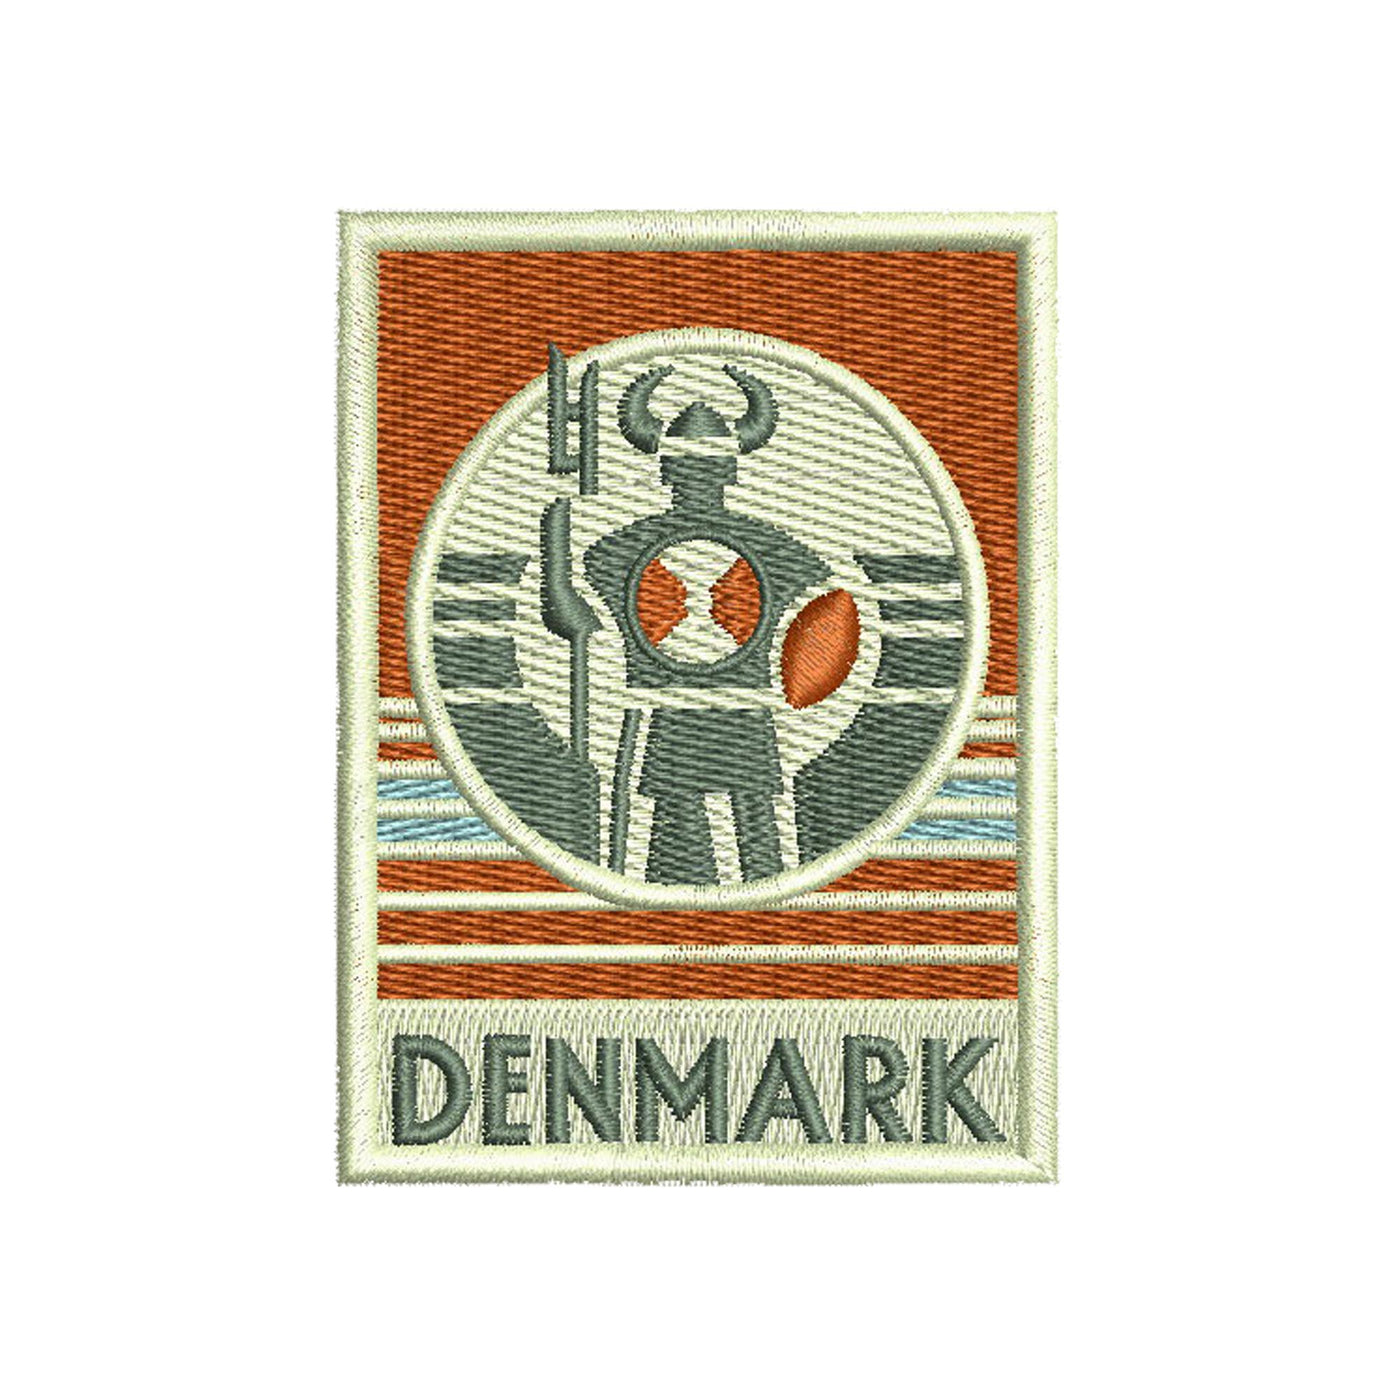 Denmark Hook Patch